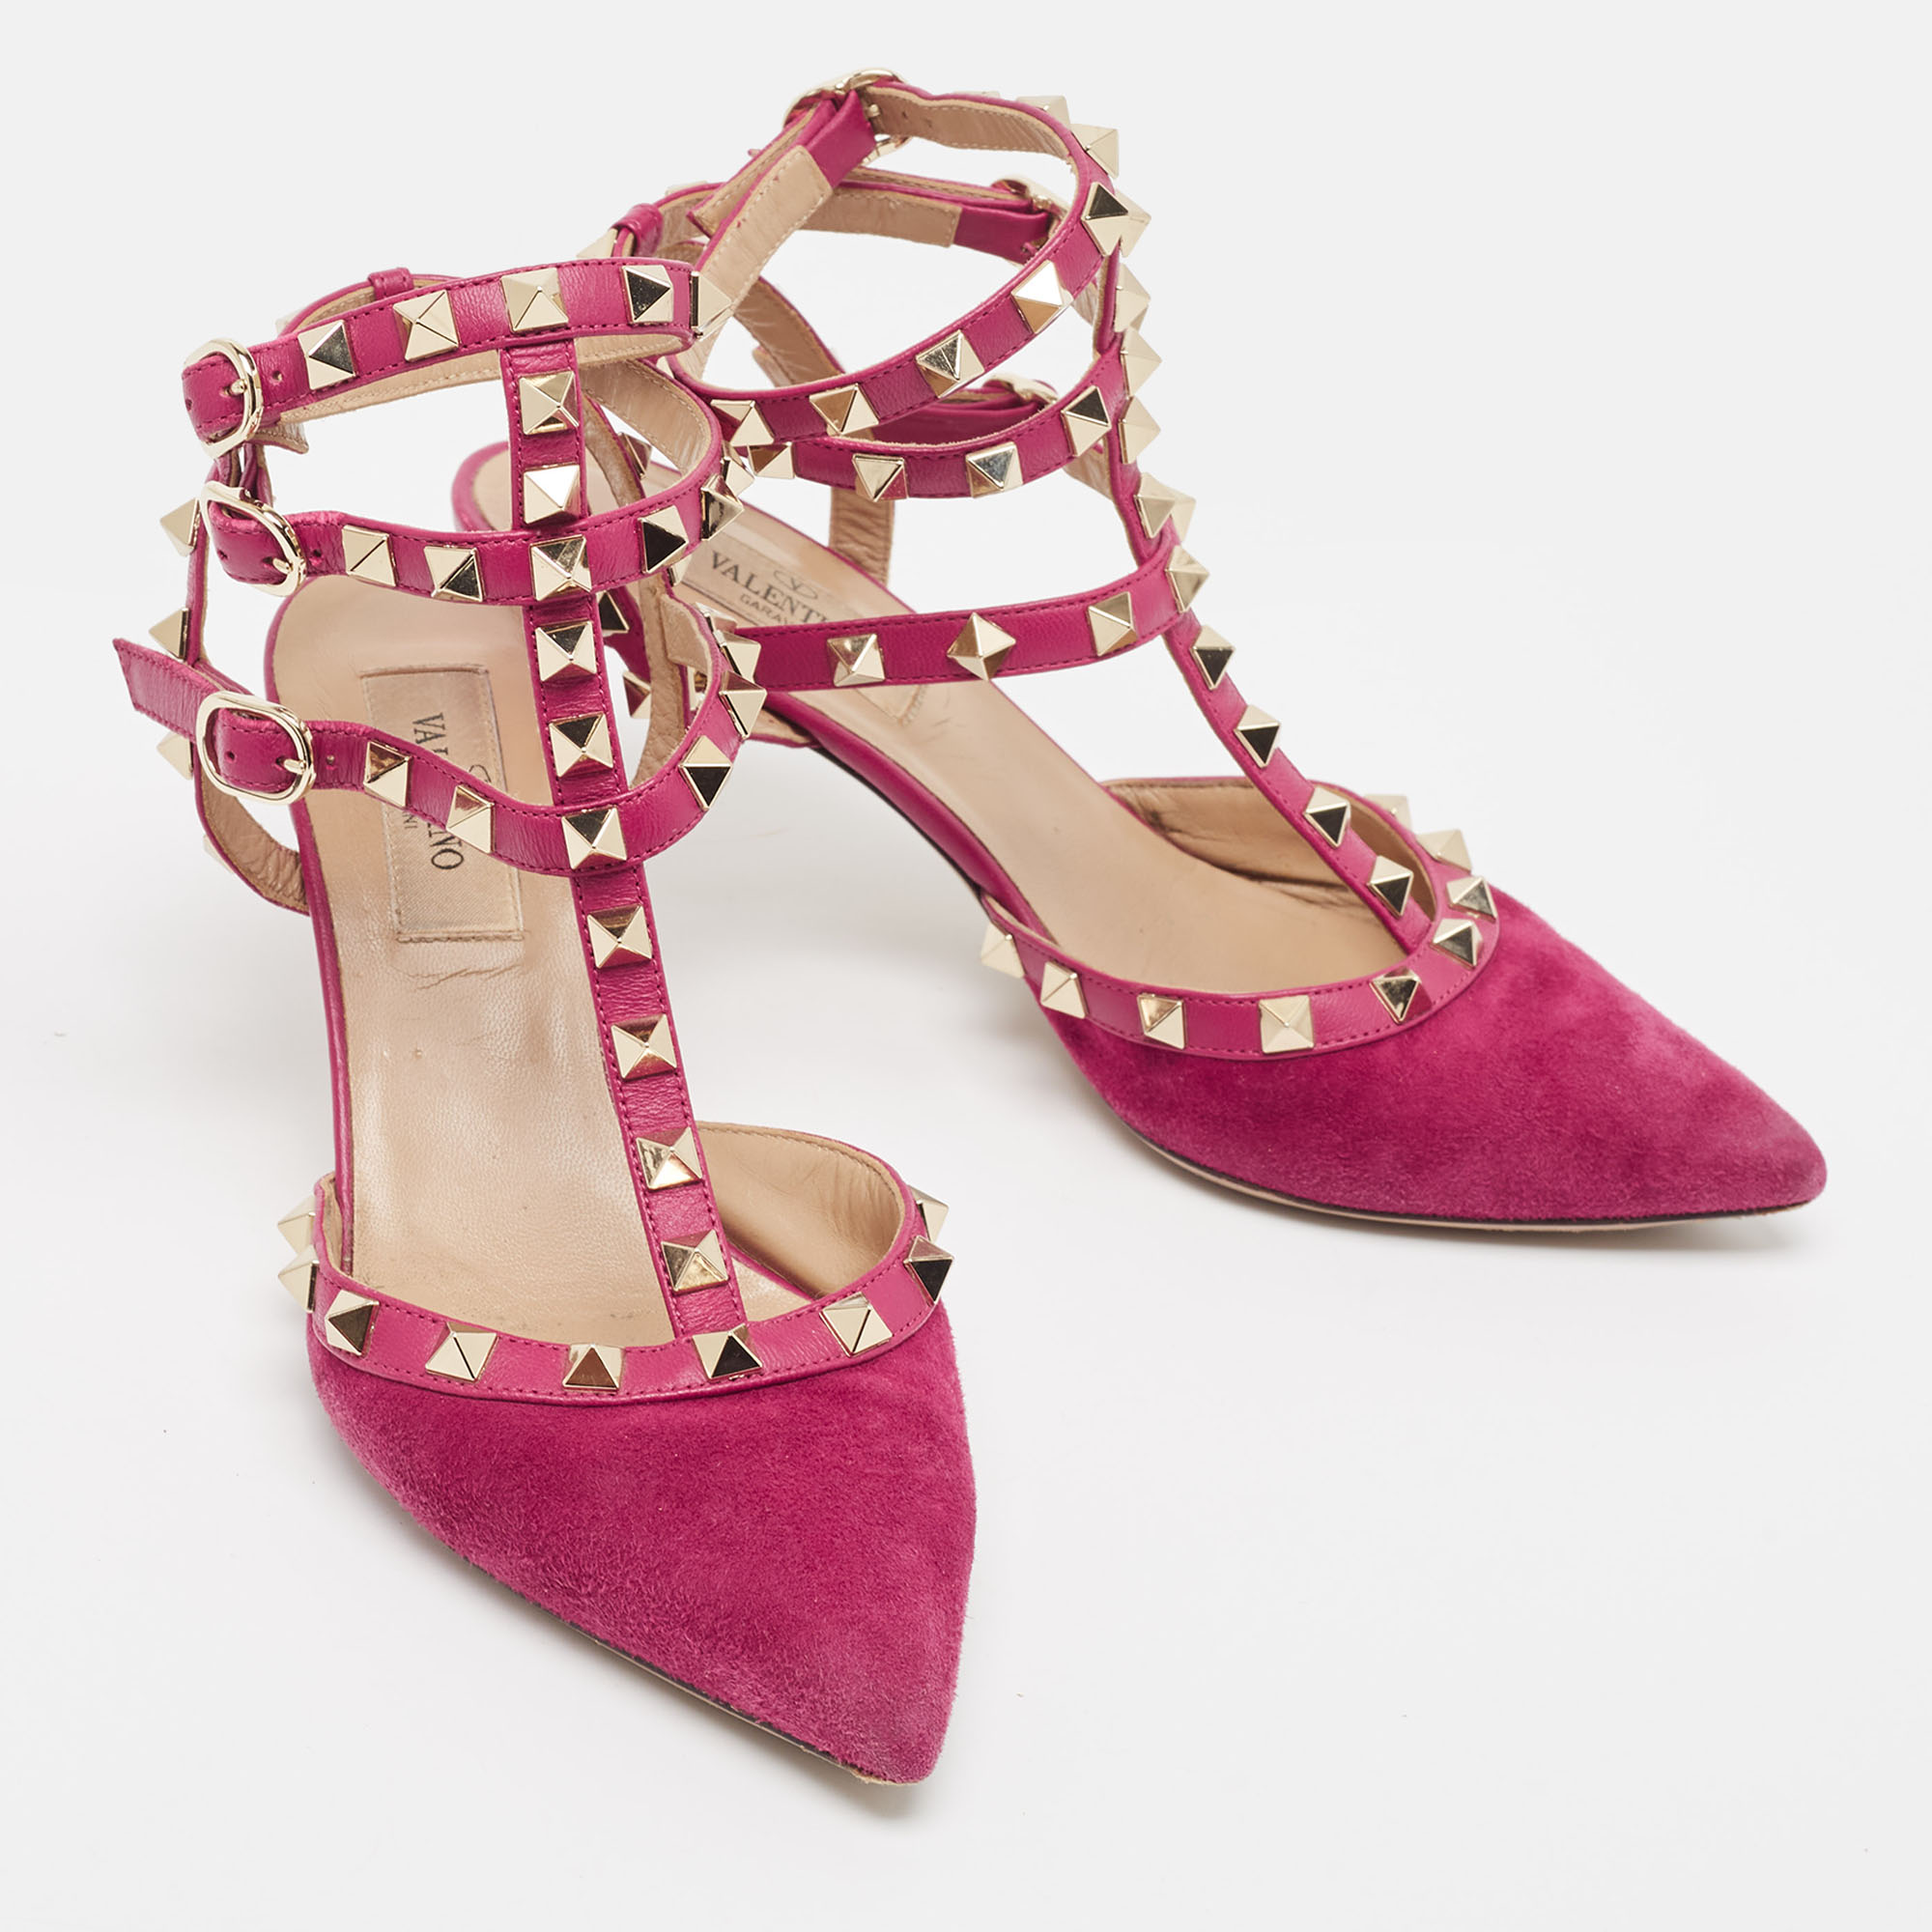 Valentino Pink Suede Rockstud Ankle Strap Pumps Size 36